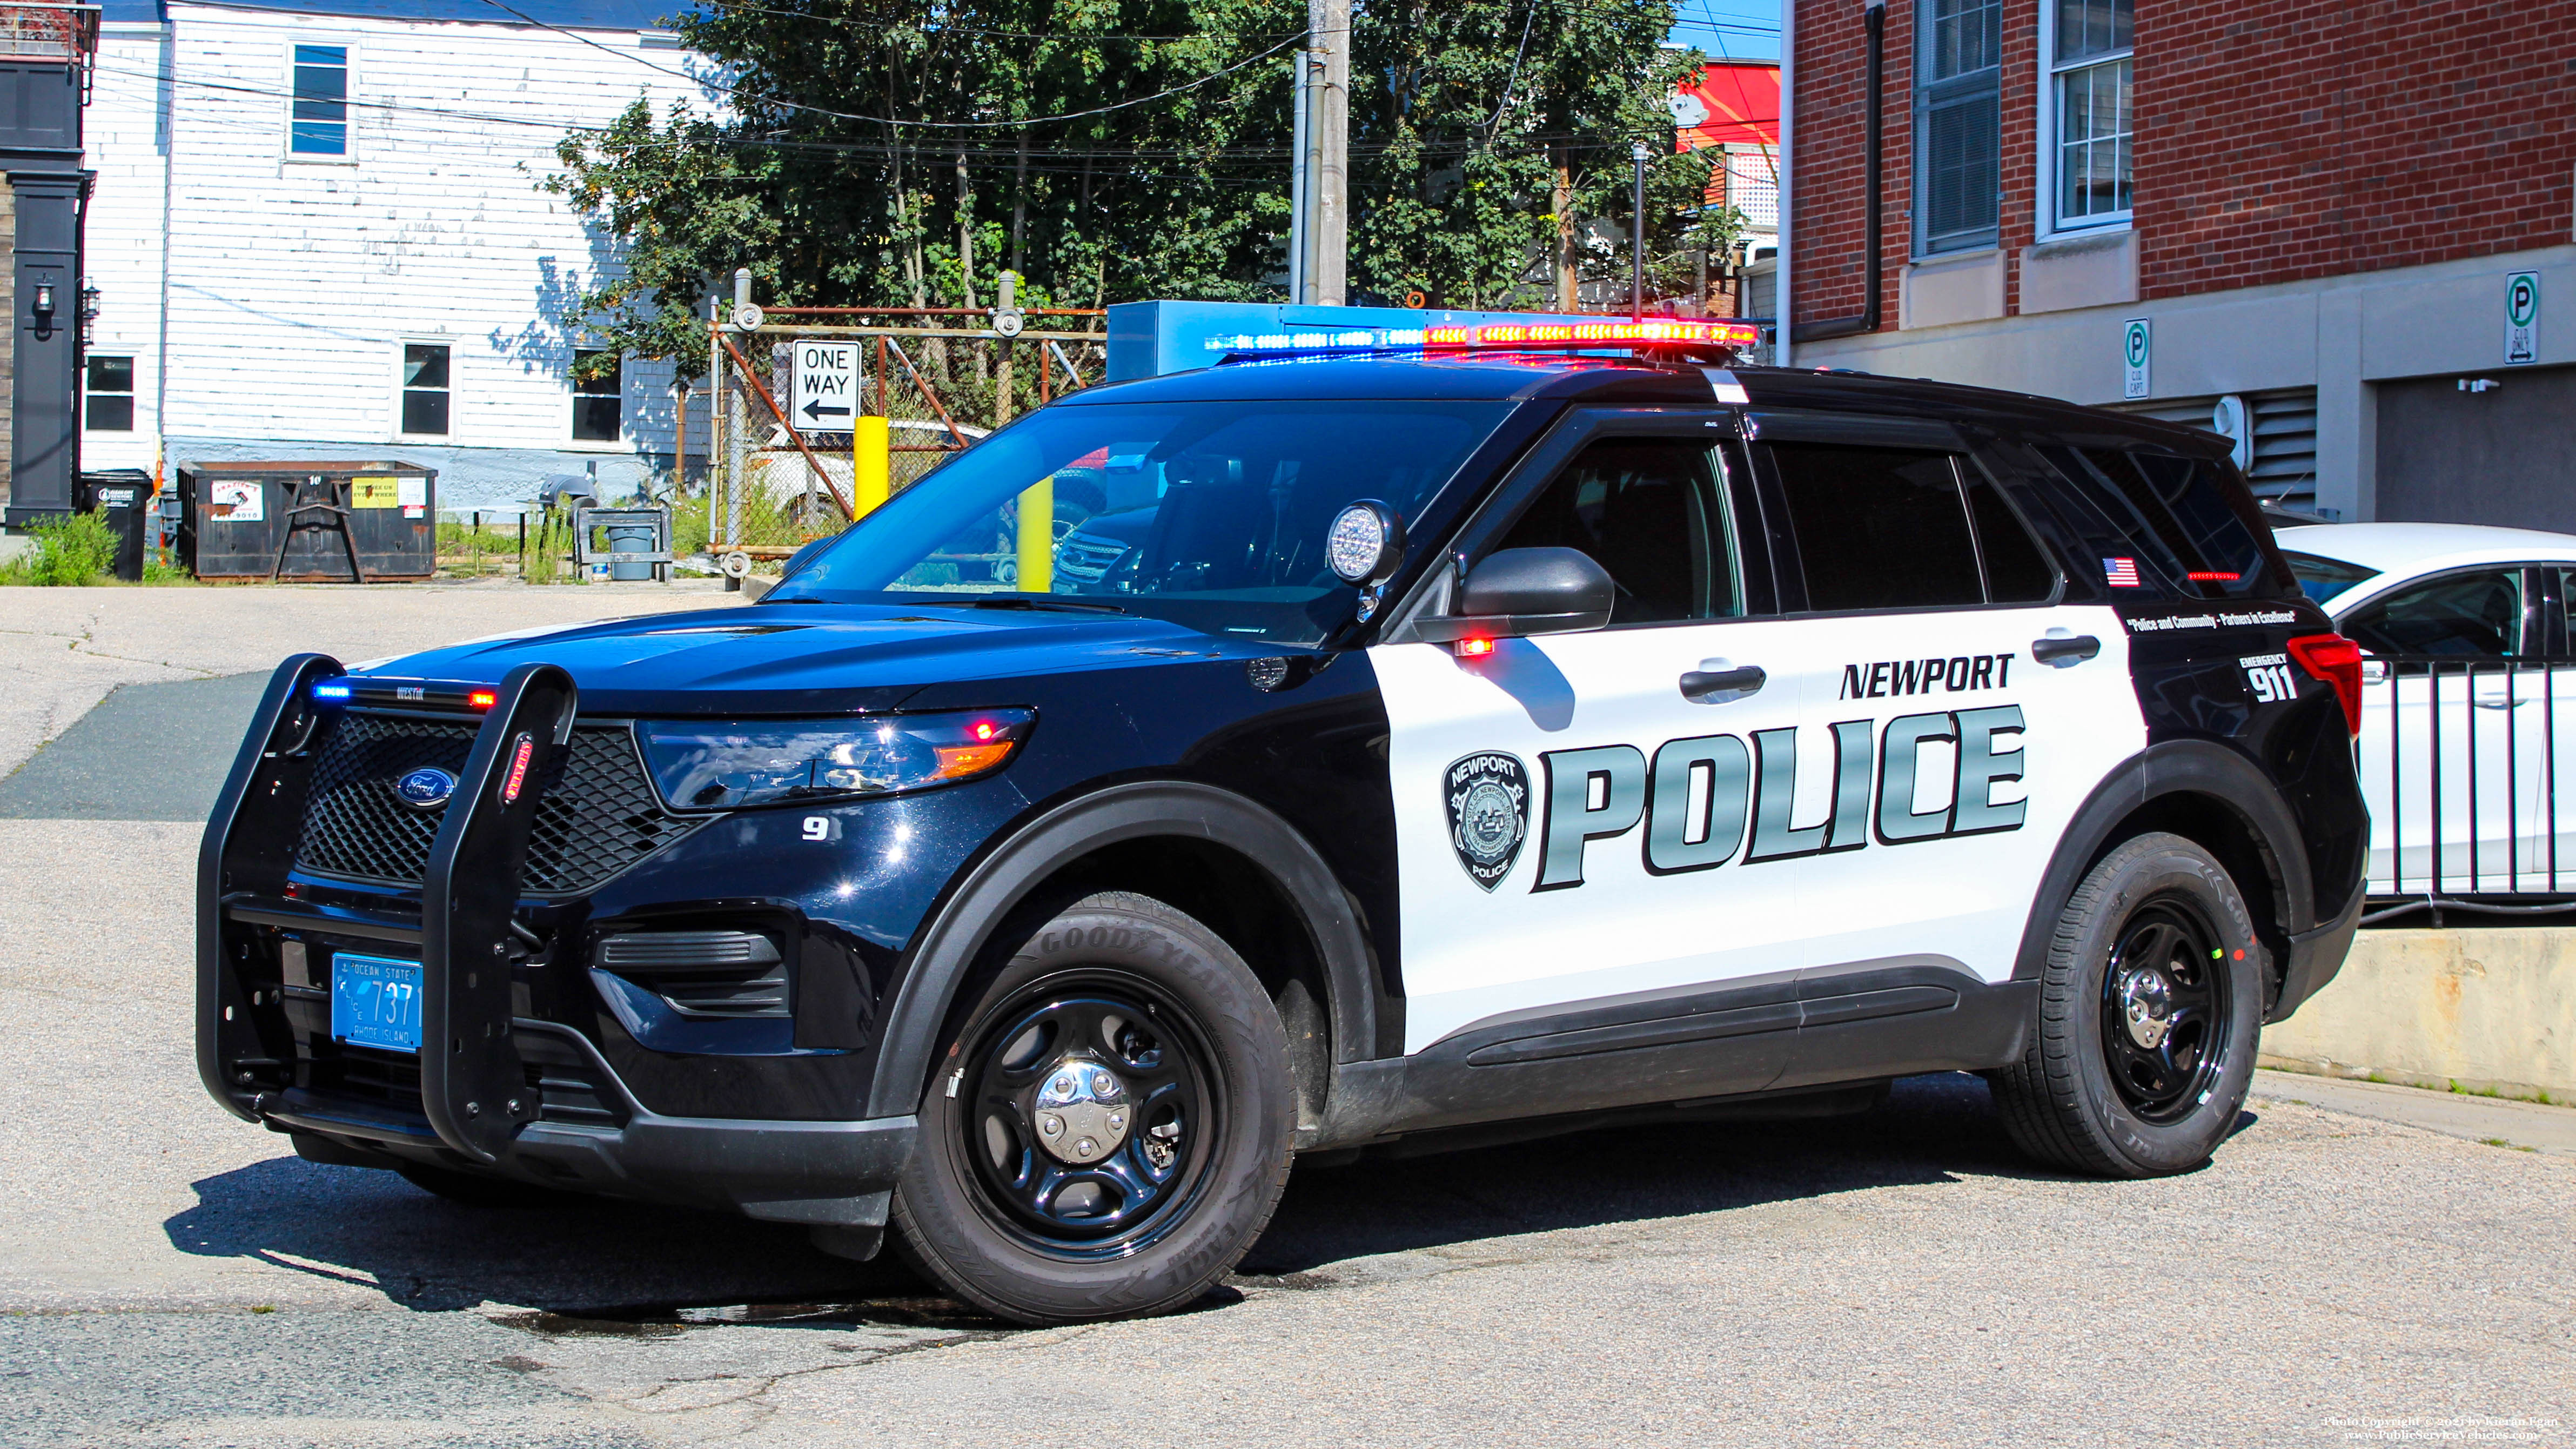 A photo  of Newport Police
            Car 9, a 2020 Ford Police Interceptor Utility             taken by Kieran Egan